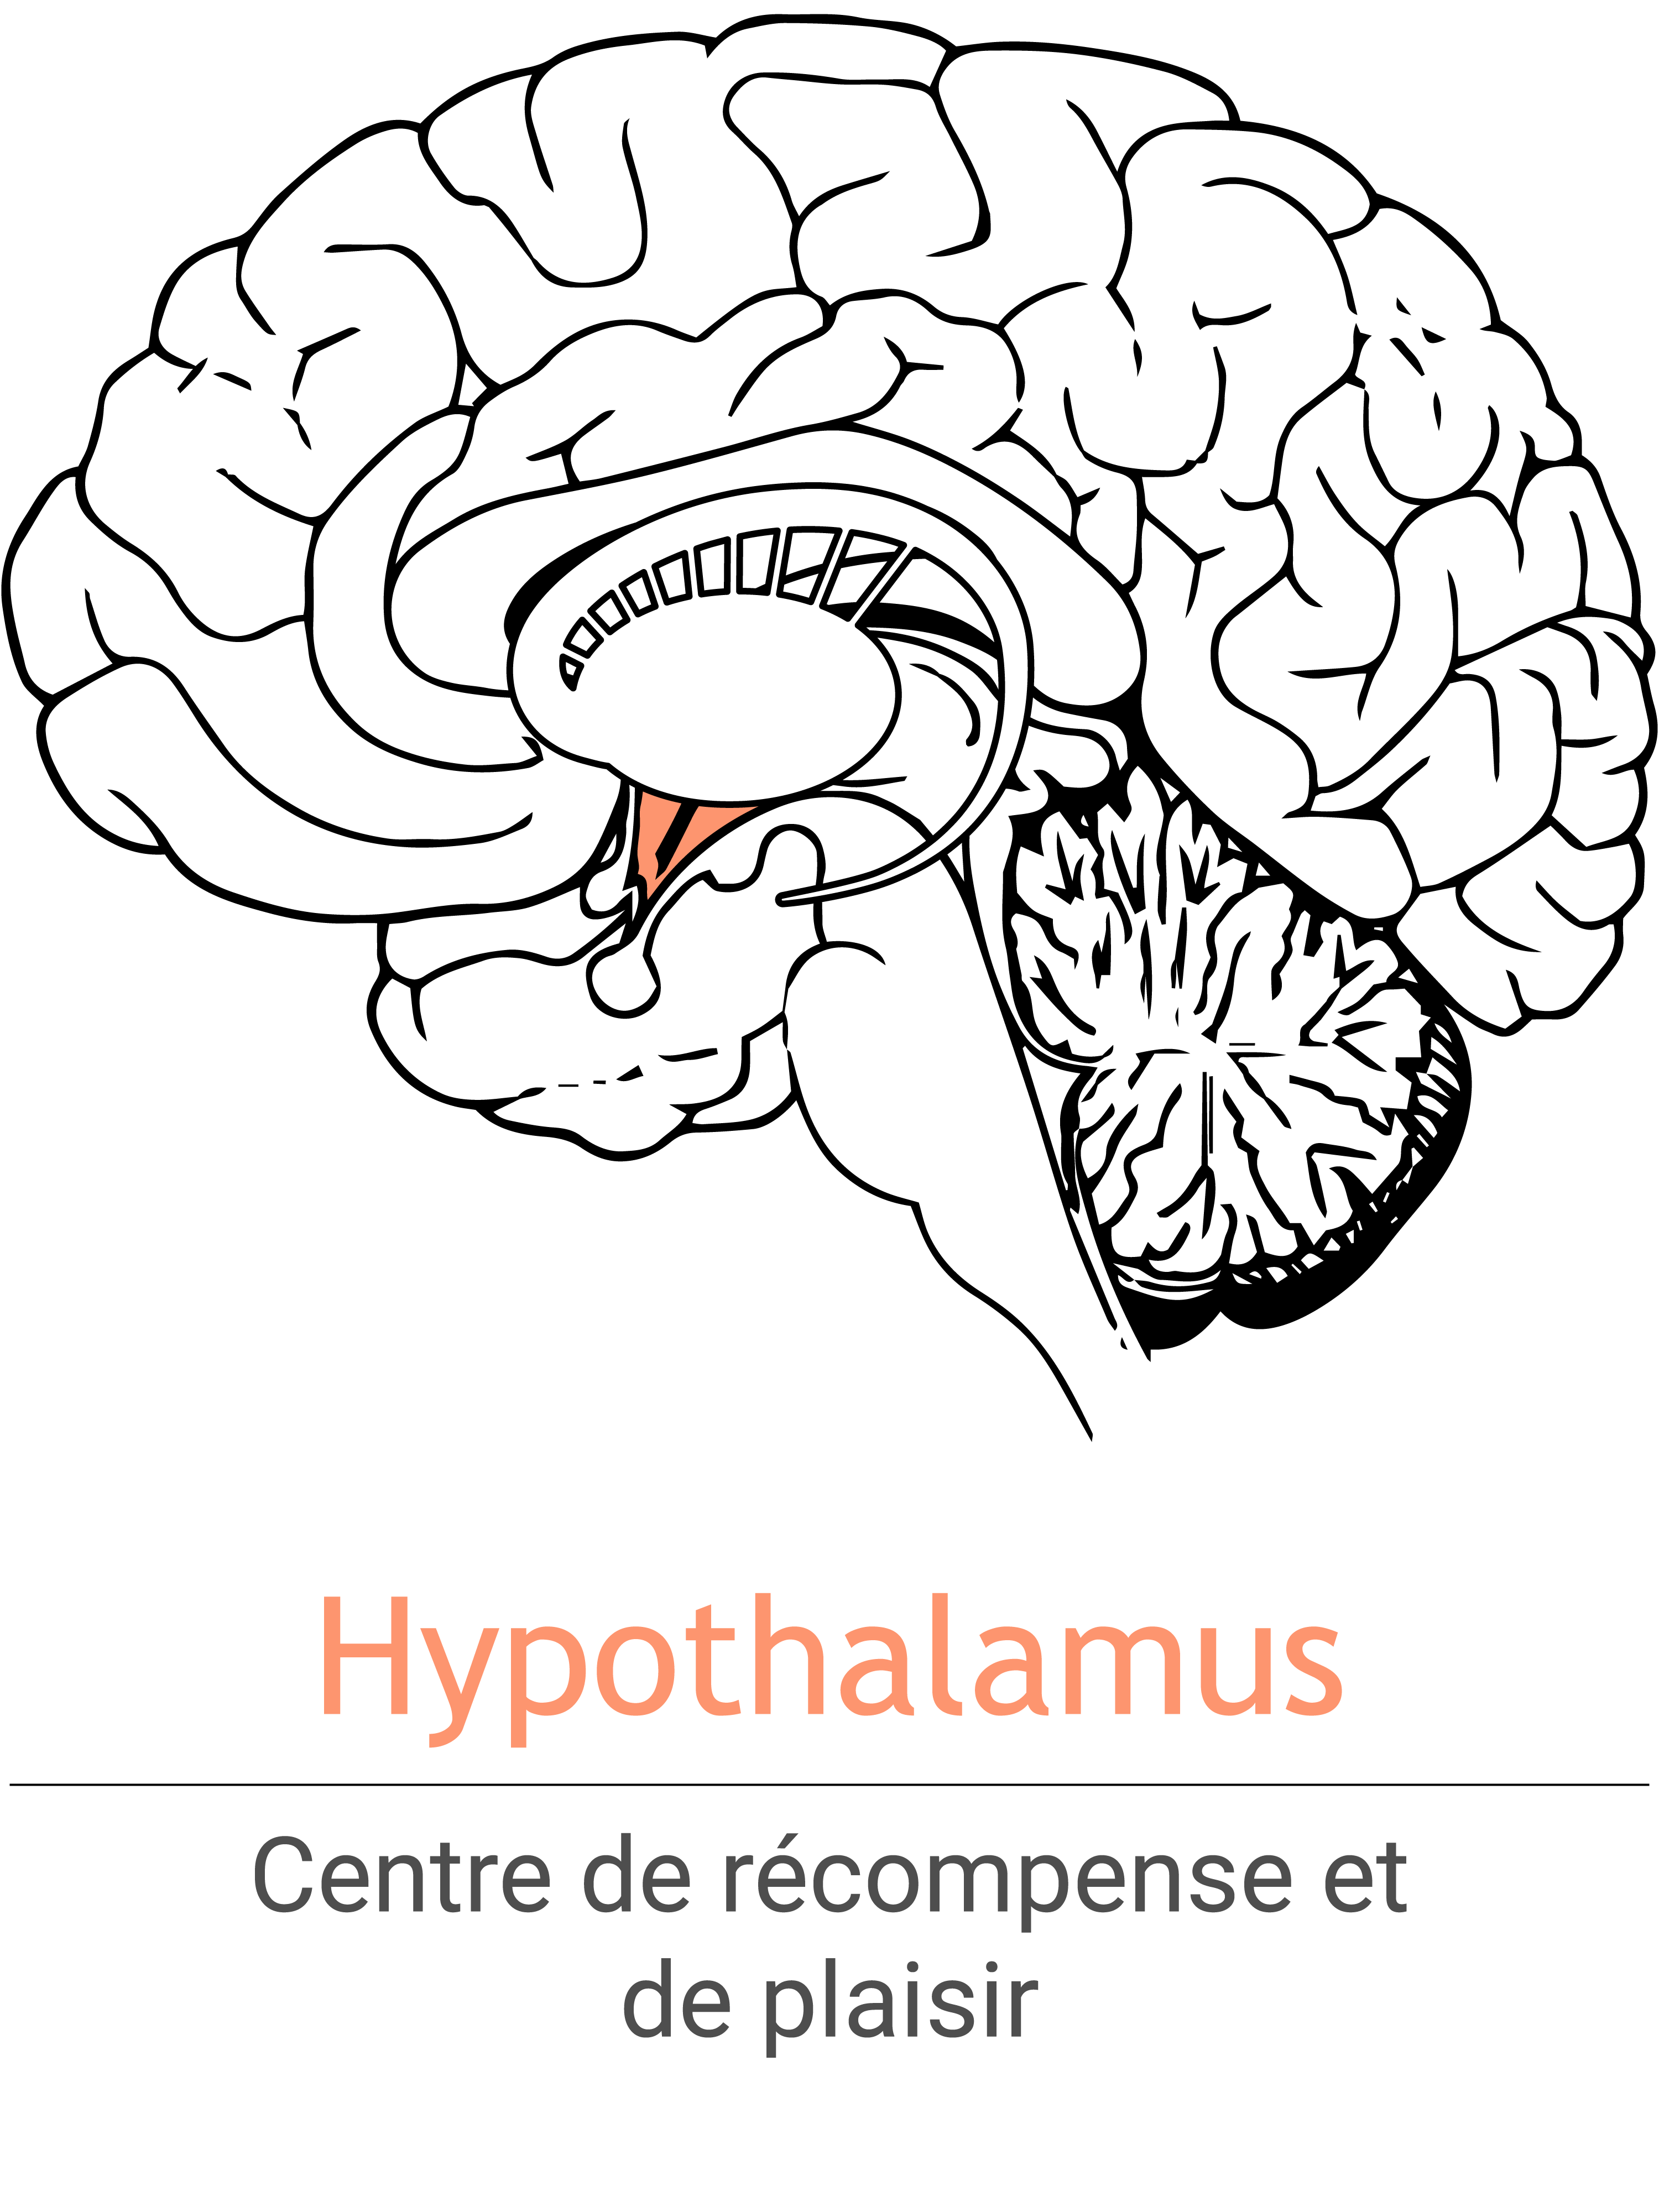 MSH_Hypothalamus_FR